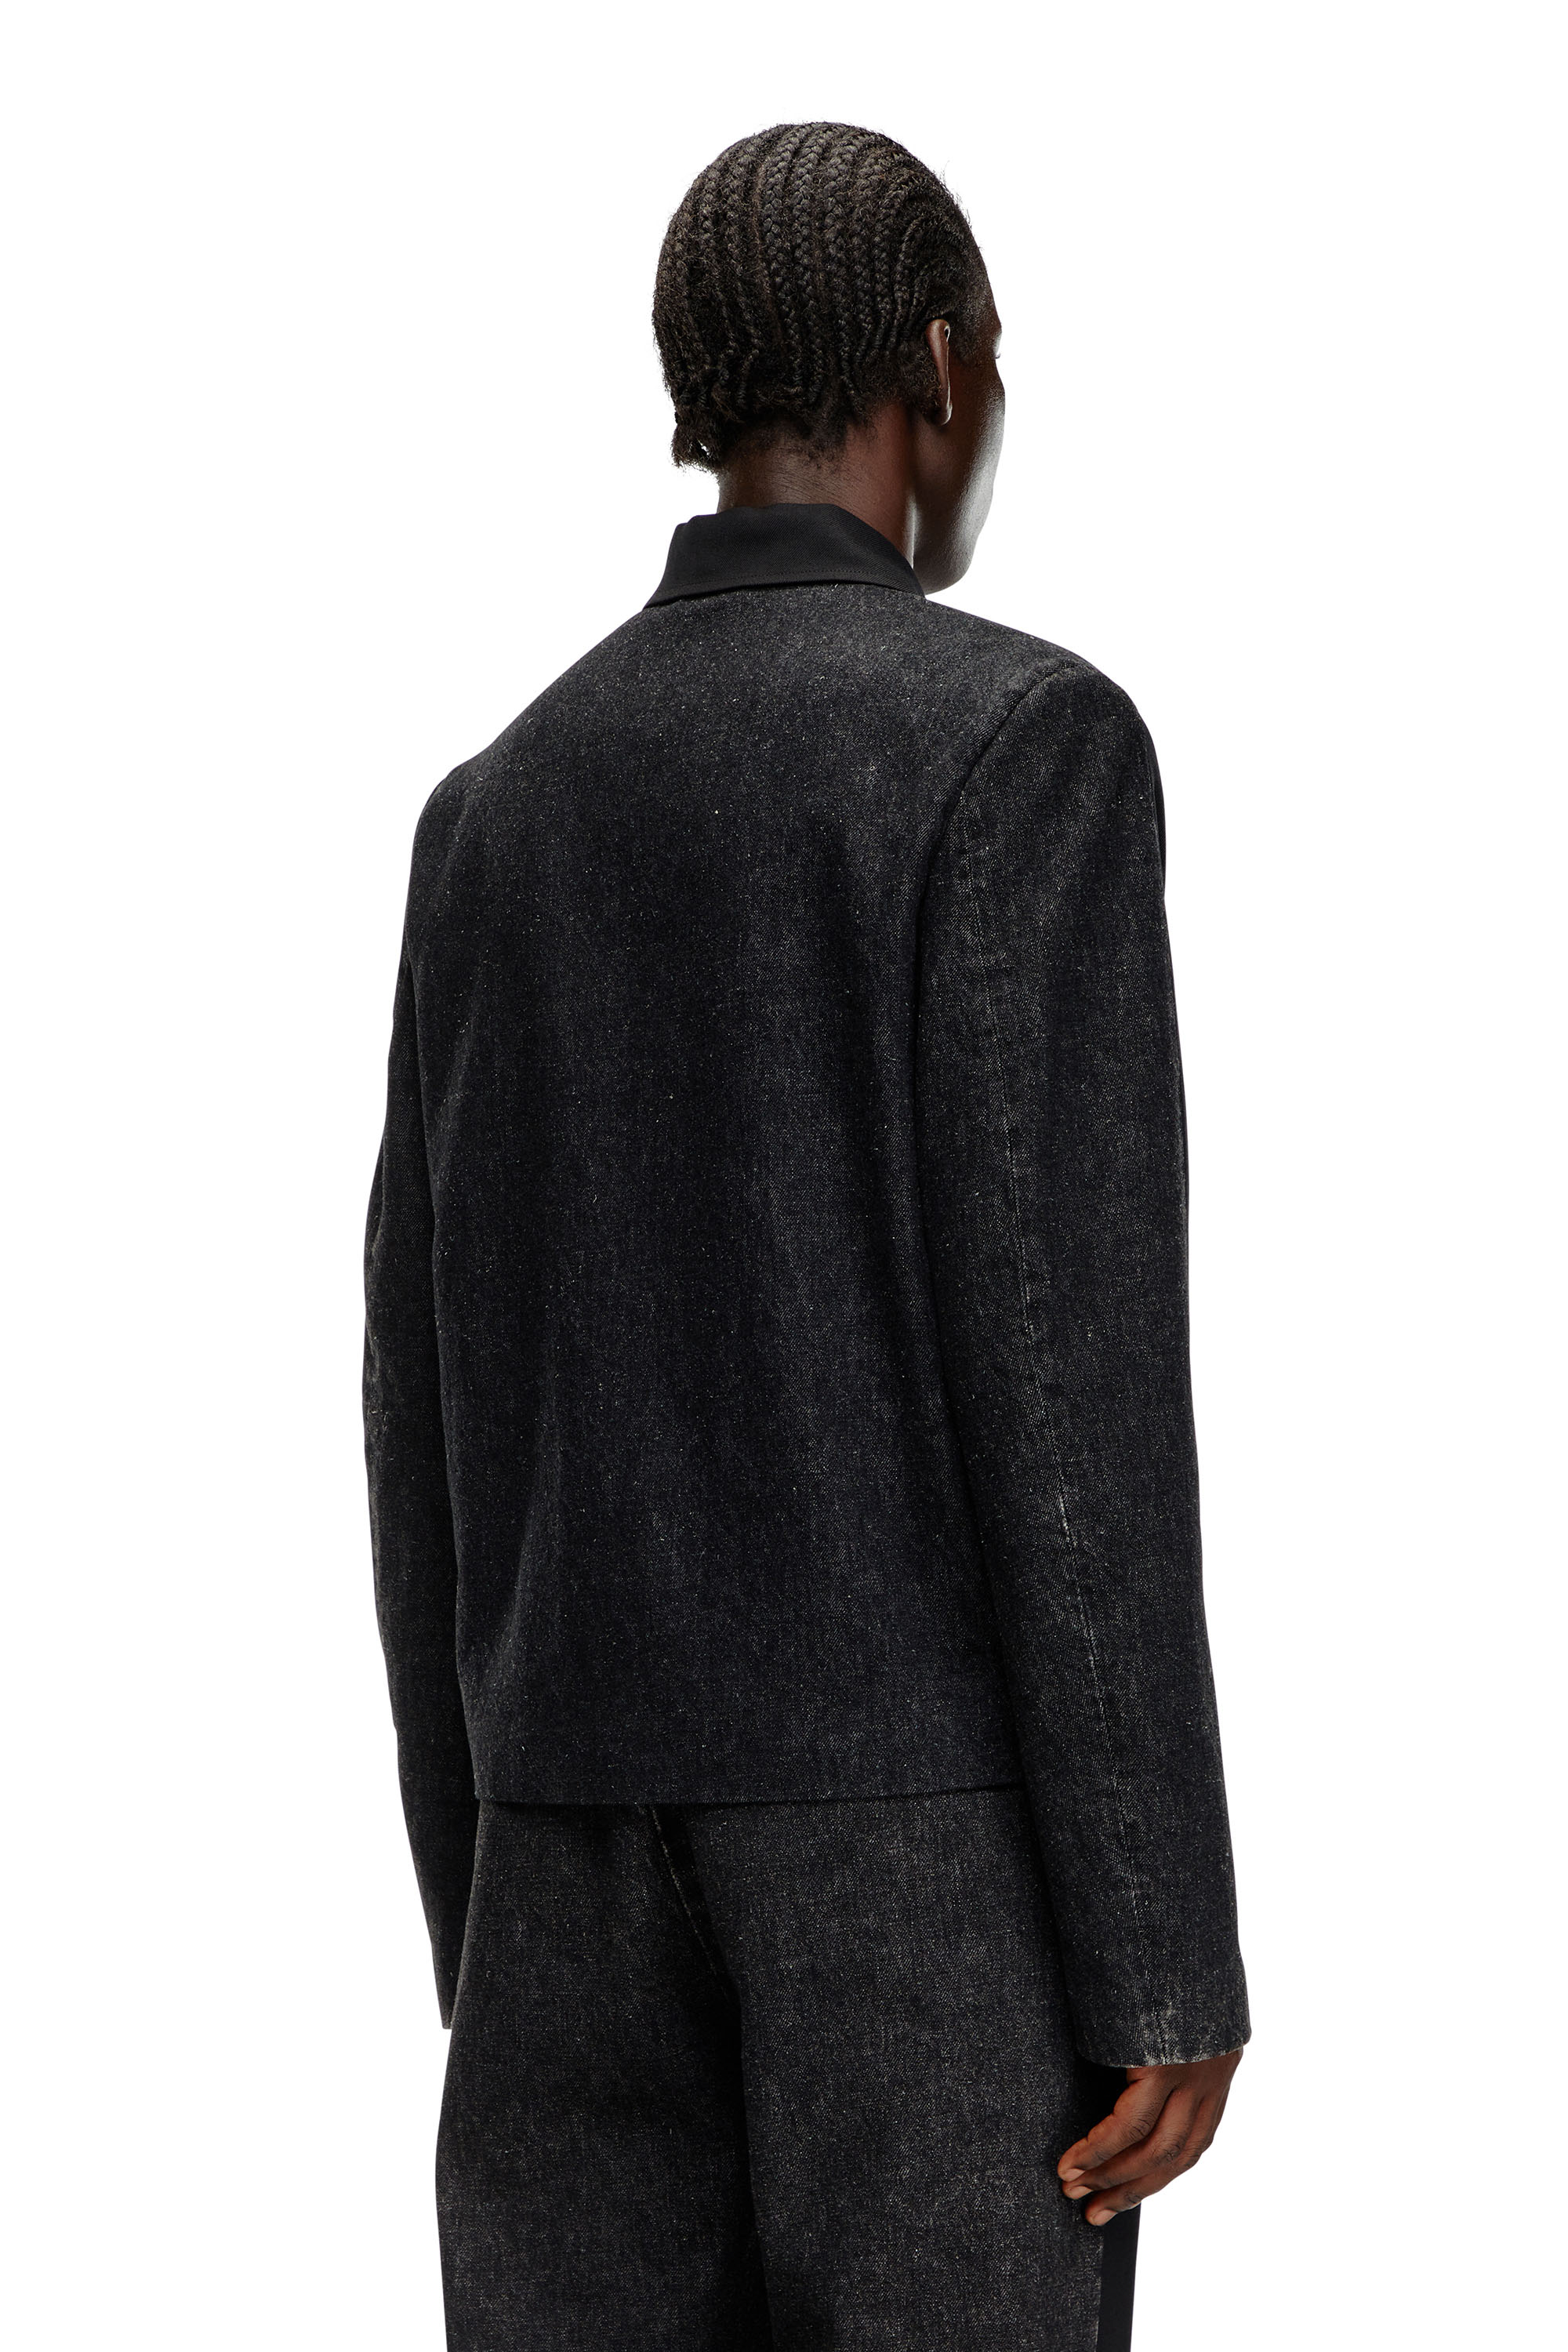 Diesel - J-RHEIN, Male Blouson jacket in wool blend and denim in ブラック - Image 4